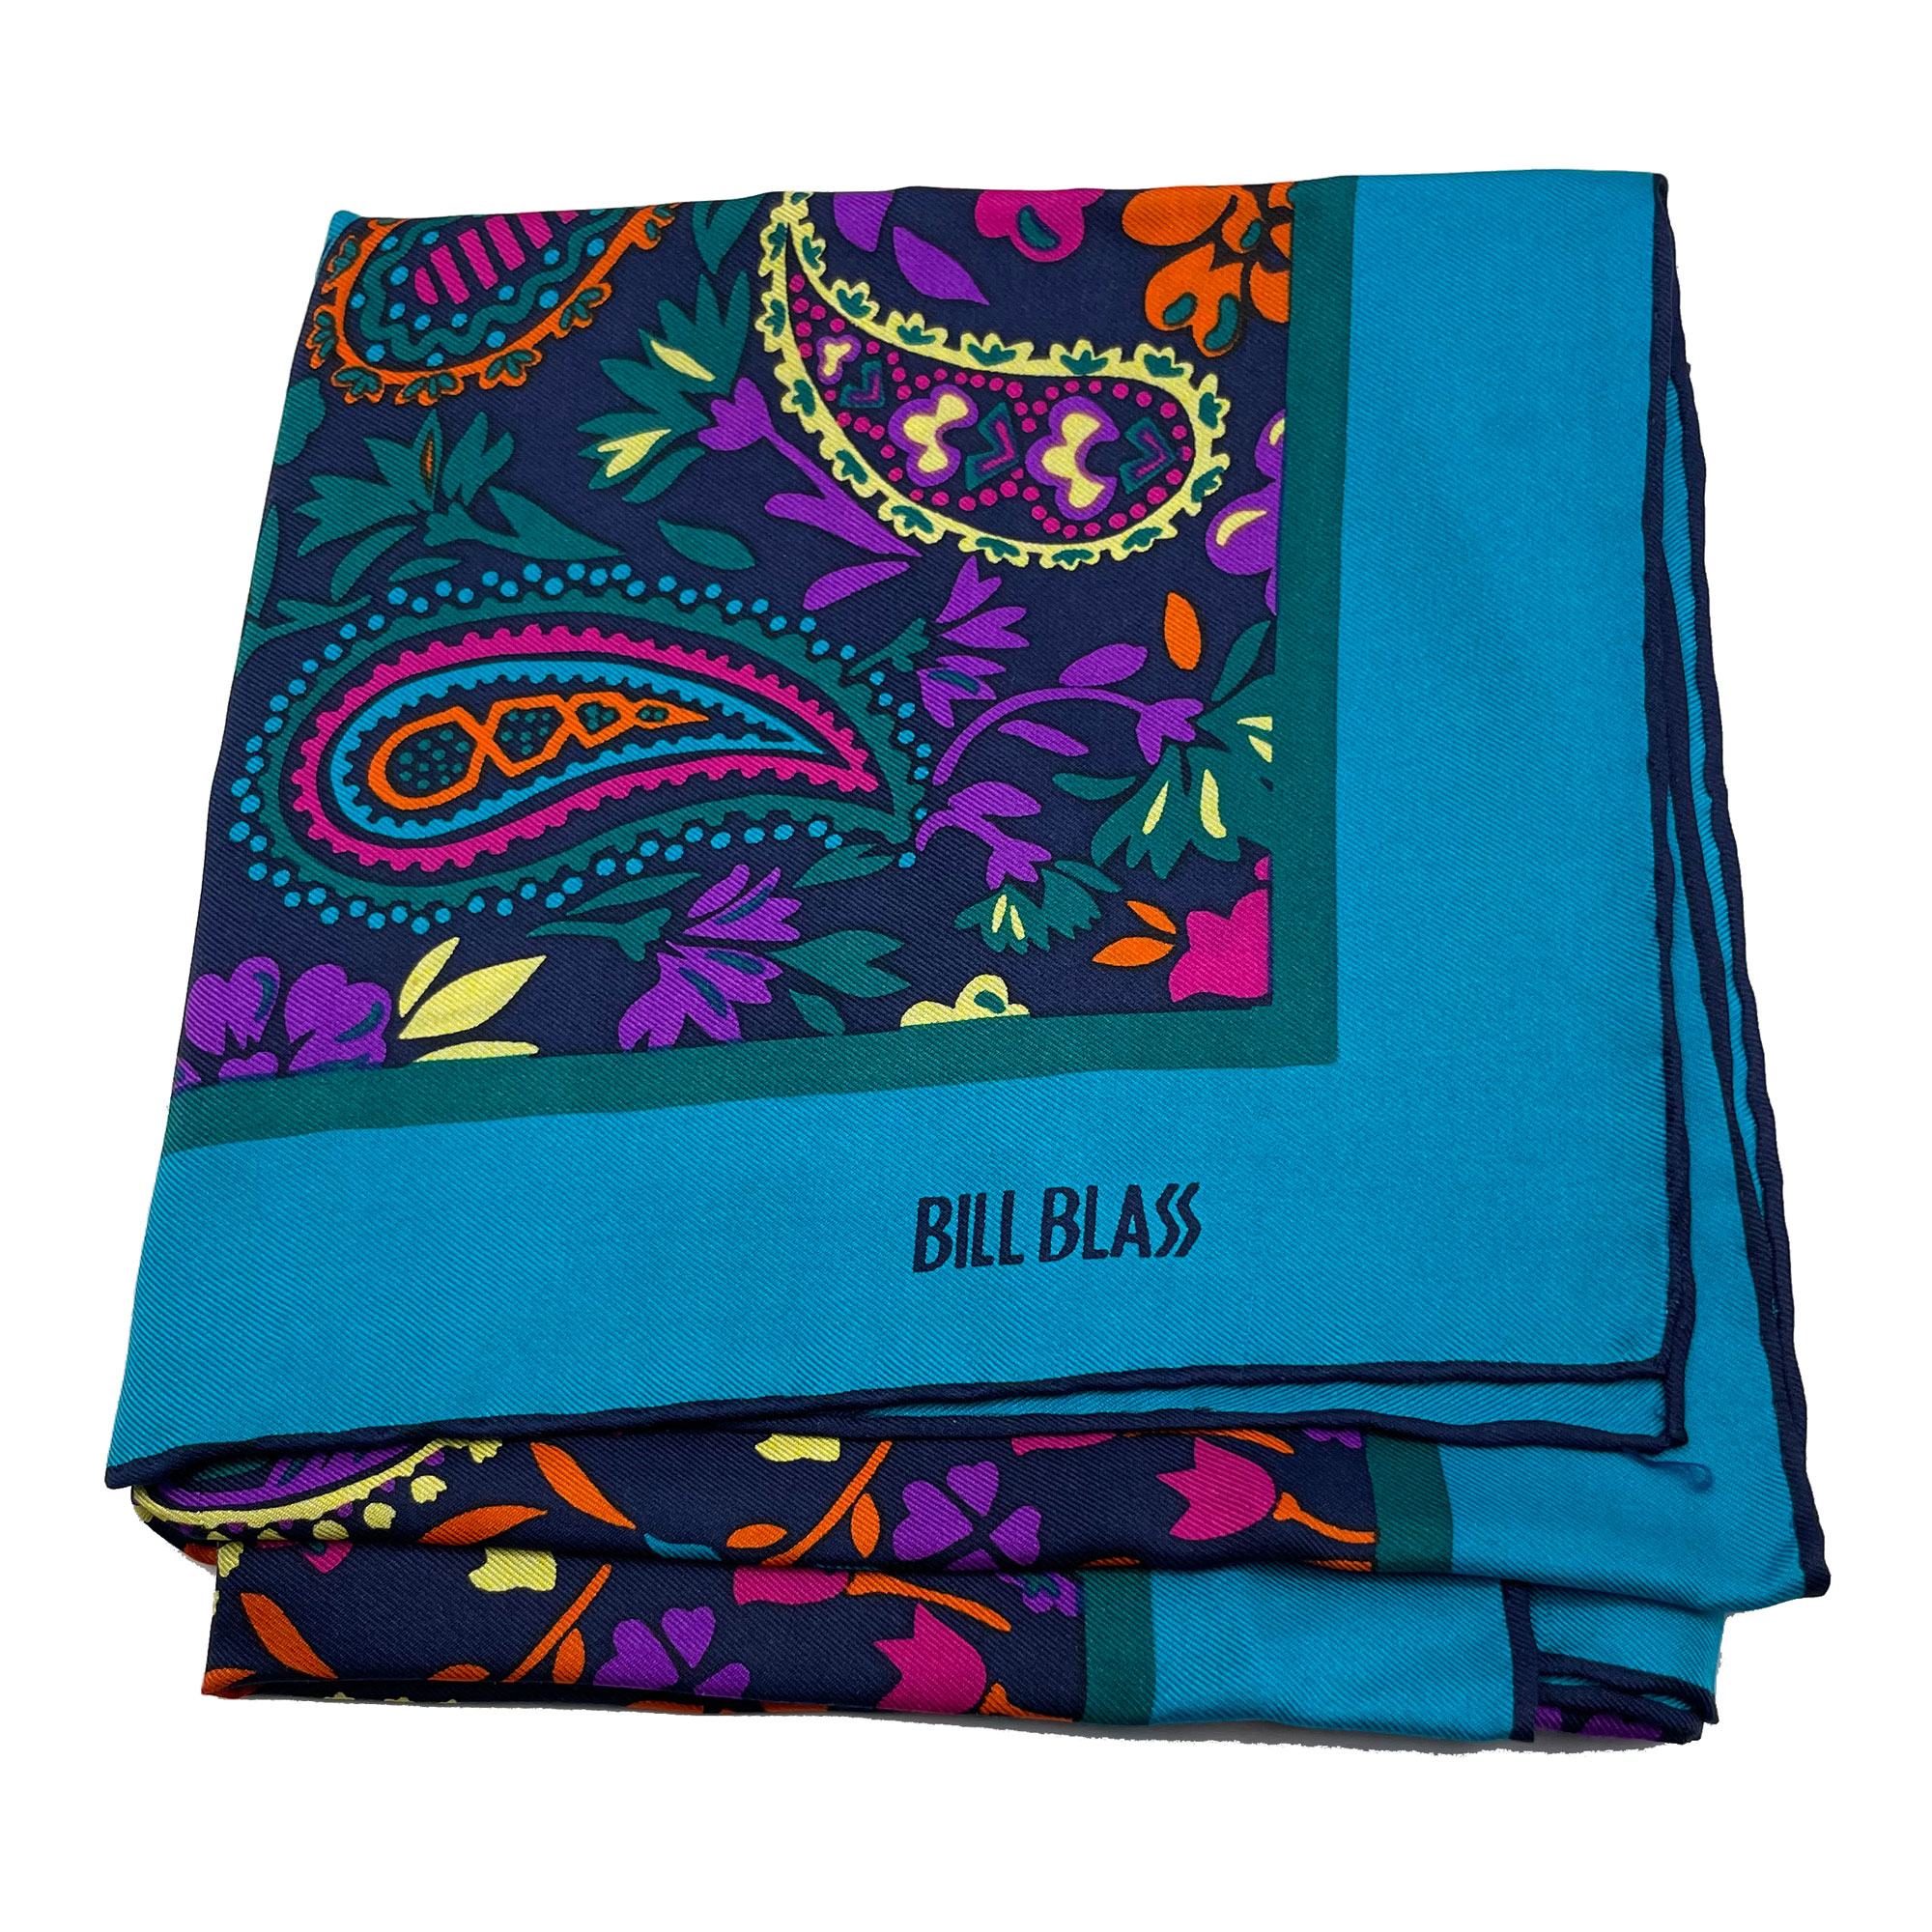 1980s Bill Blass silk scarf